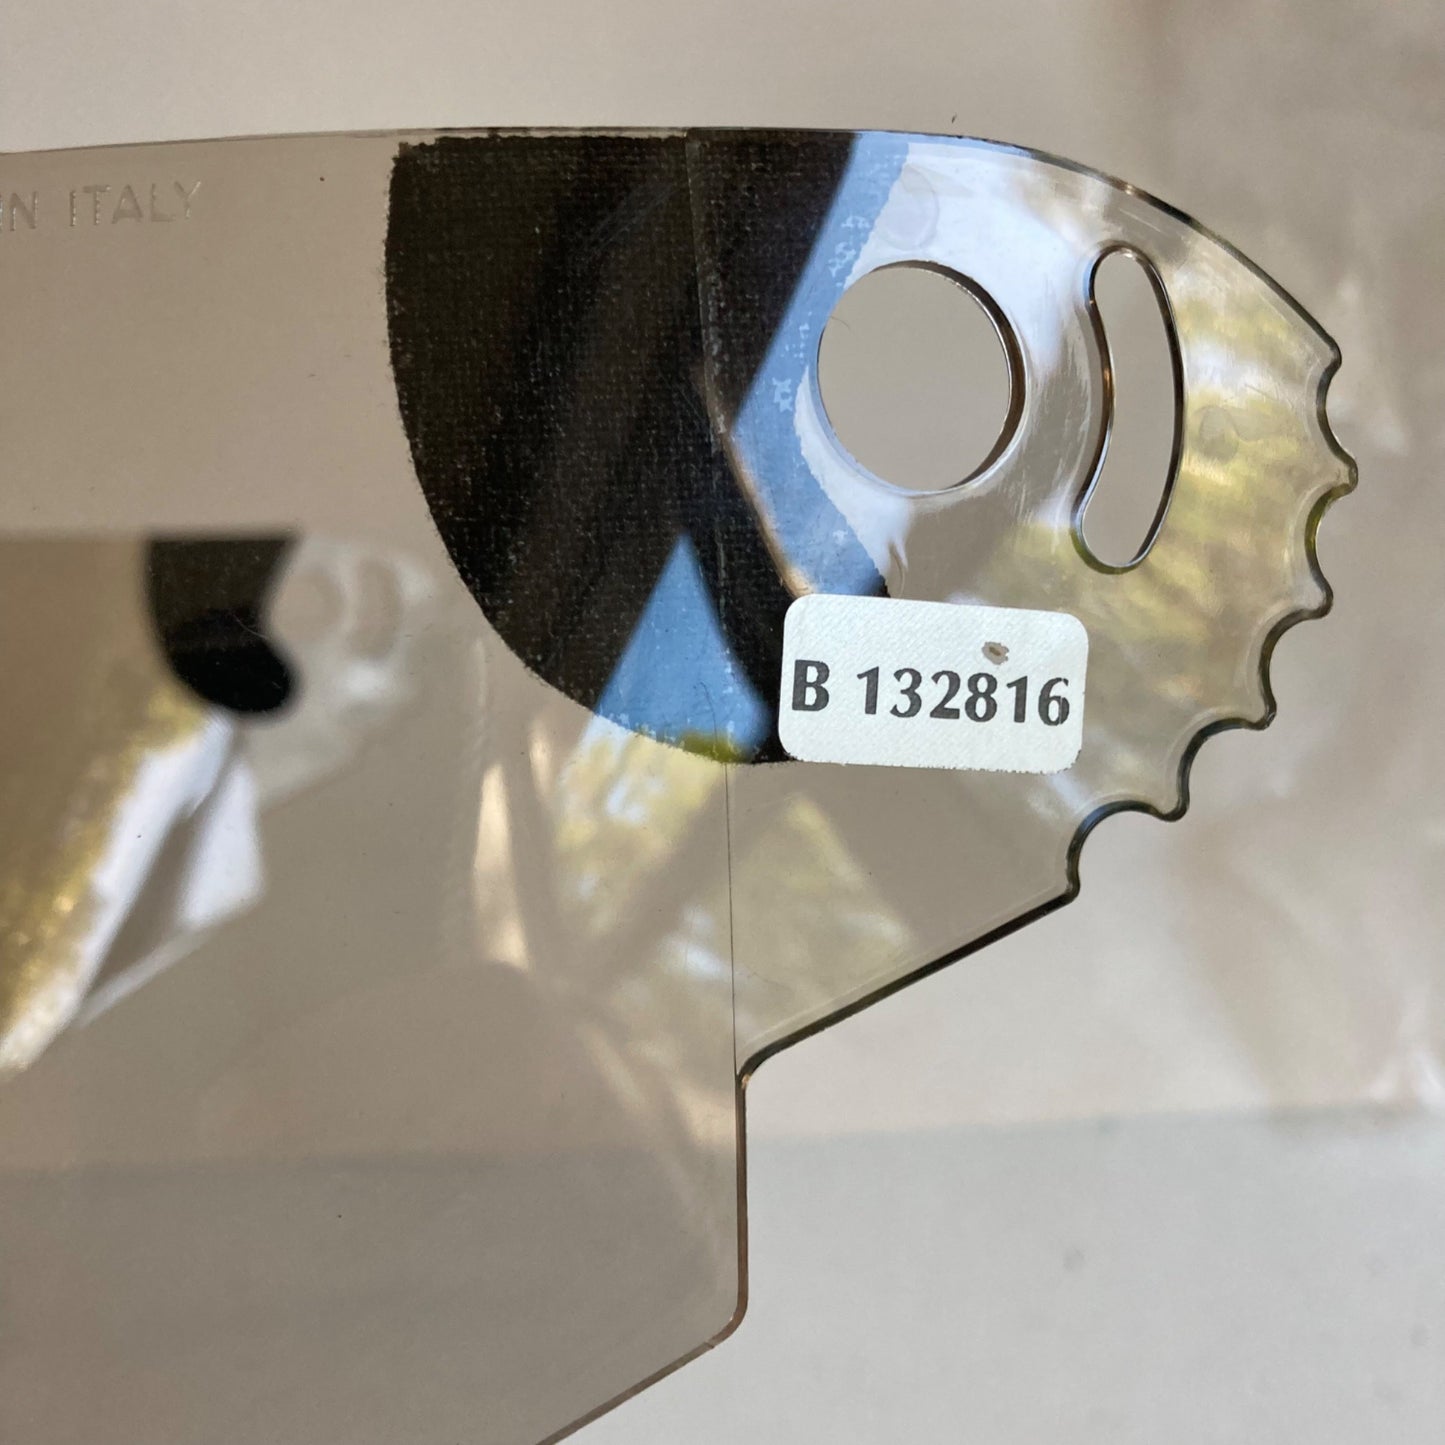 Bieffe B-132816 Motorcycle Helmet VISOR Clear Tinted Face Shield